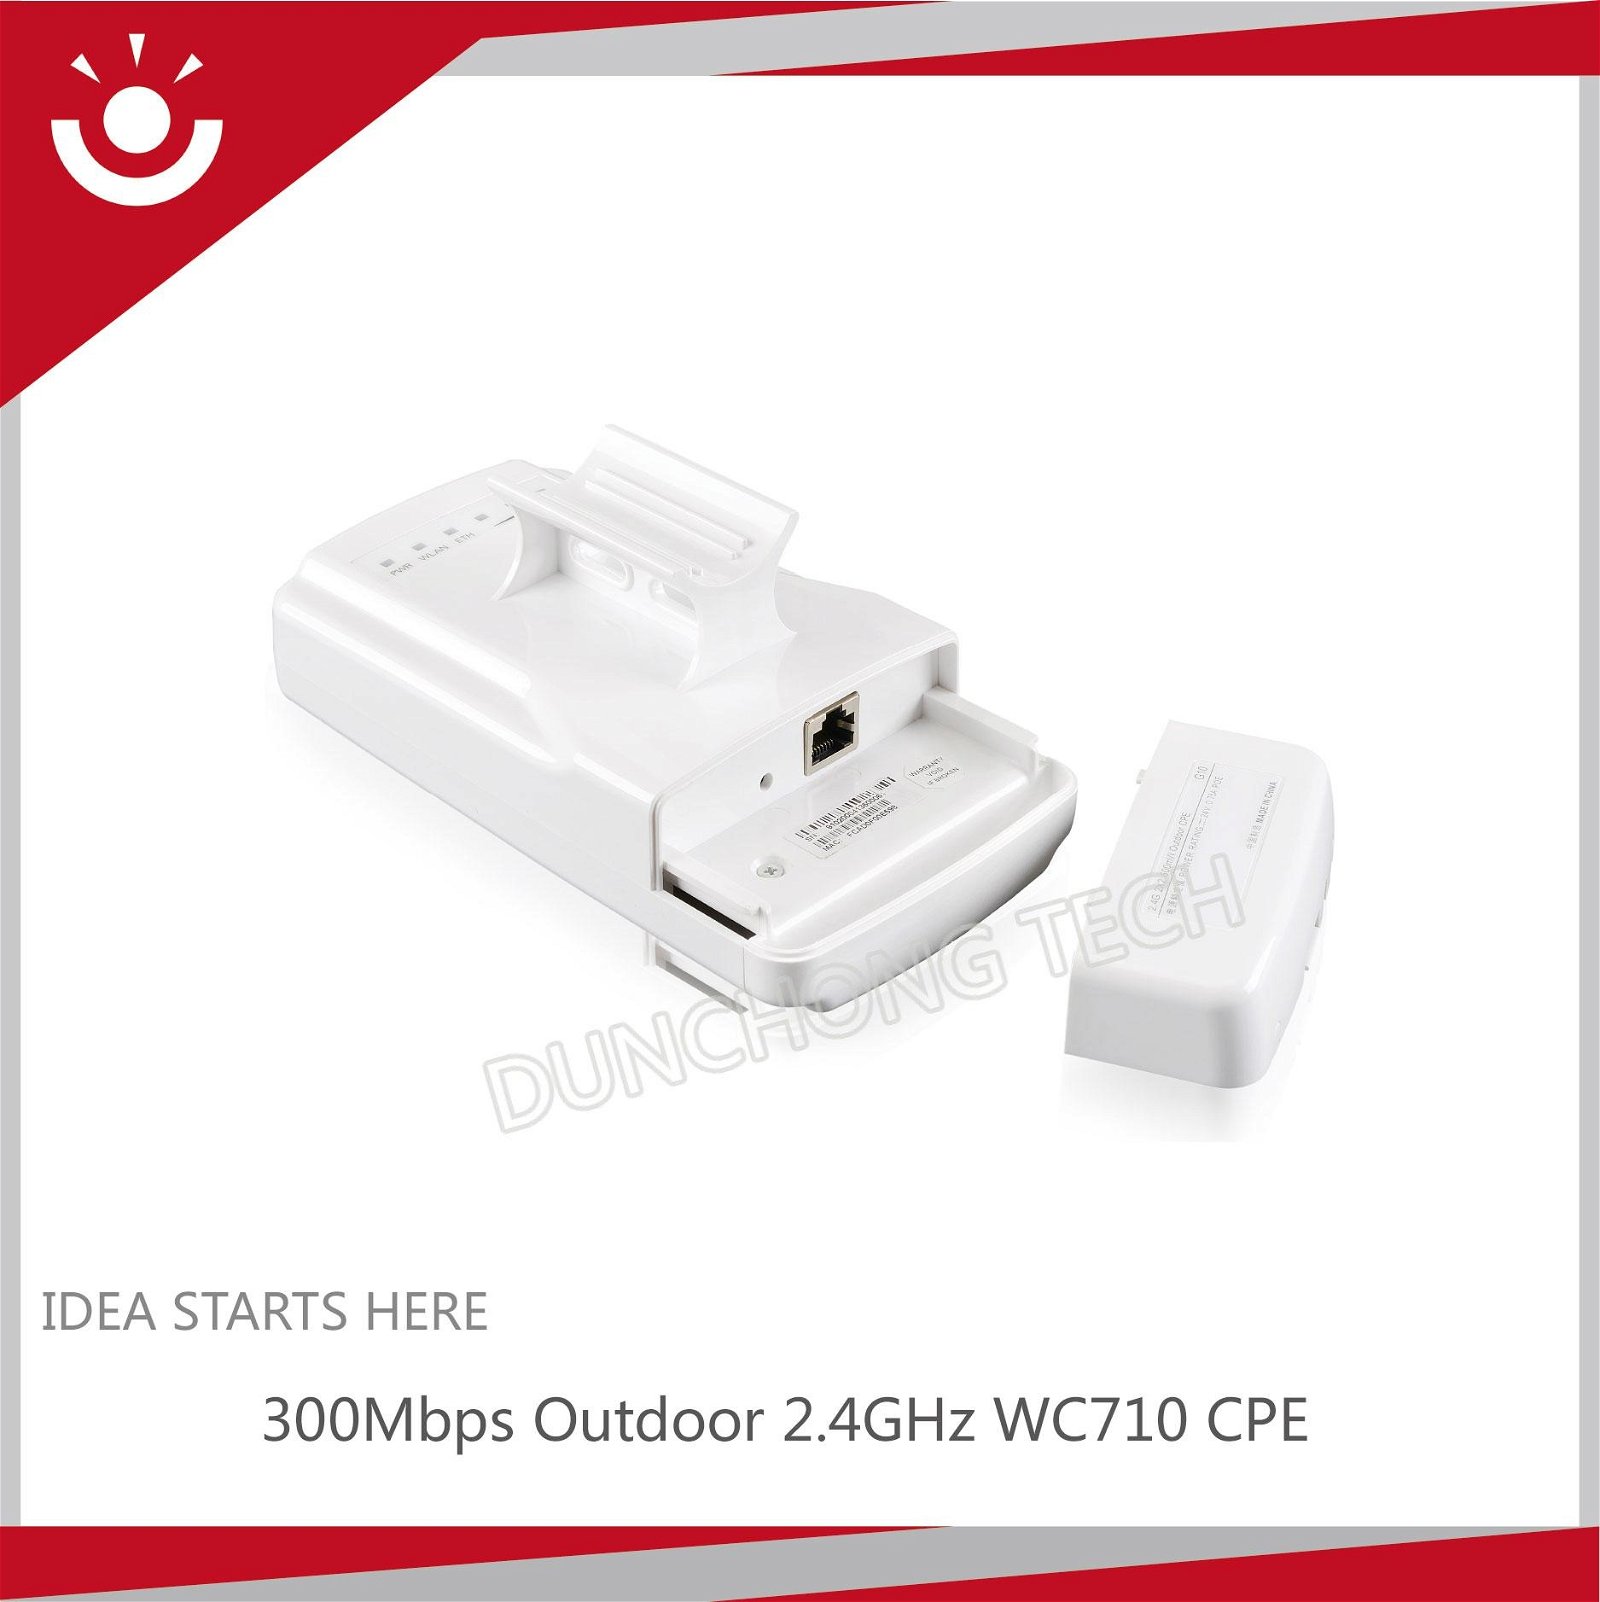 2.4GHz WC710 Outdoor Wireless Access Point CPE Bridge like wireless modem 3